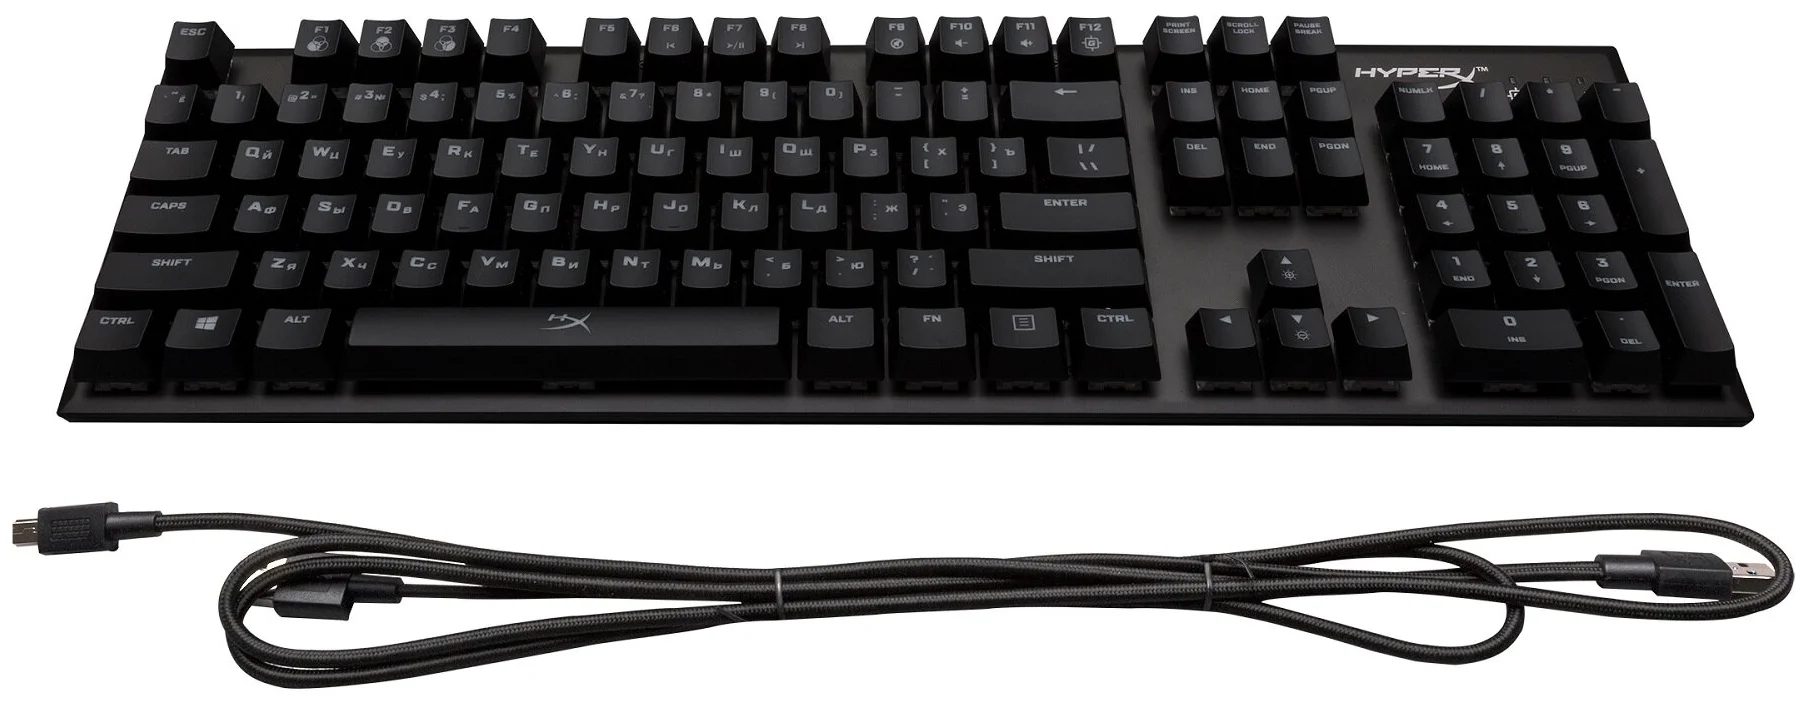 HyperX Alloy FPS RGB - кабель: USB (1.8 м)